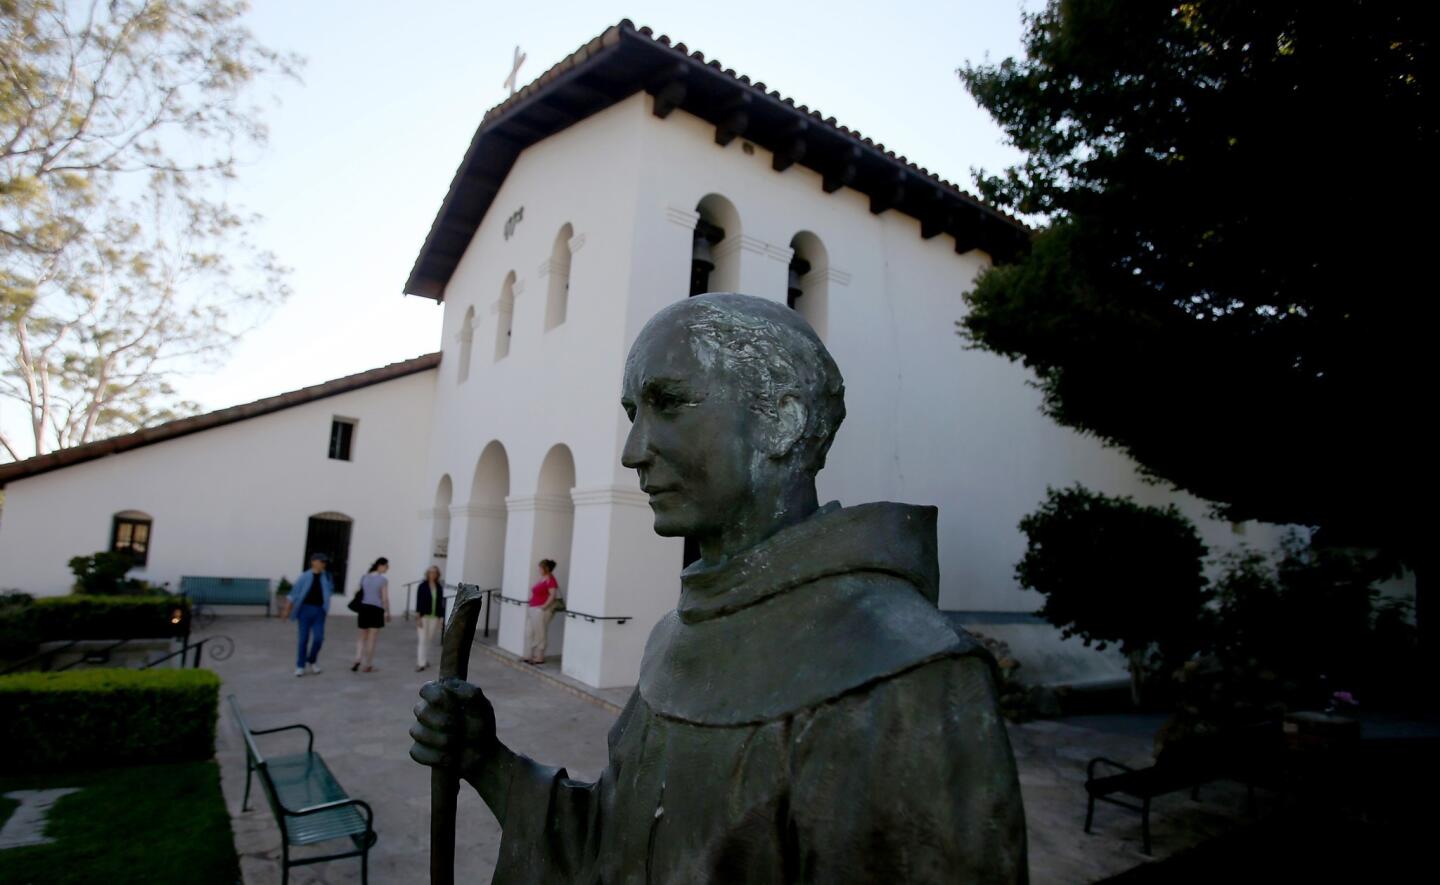 Mission San Luis Obispo de Tolosa was founded in 1772 by Father Junípero Serra.